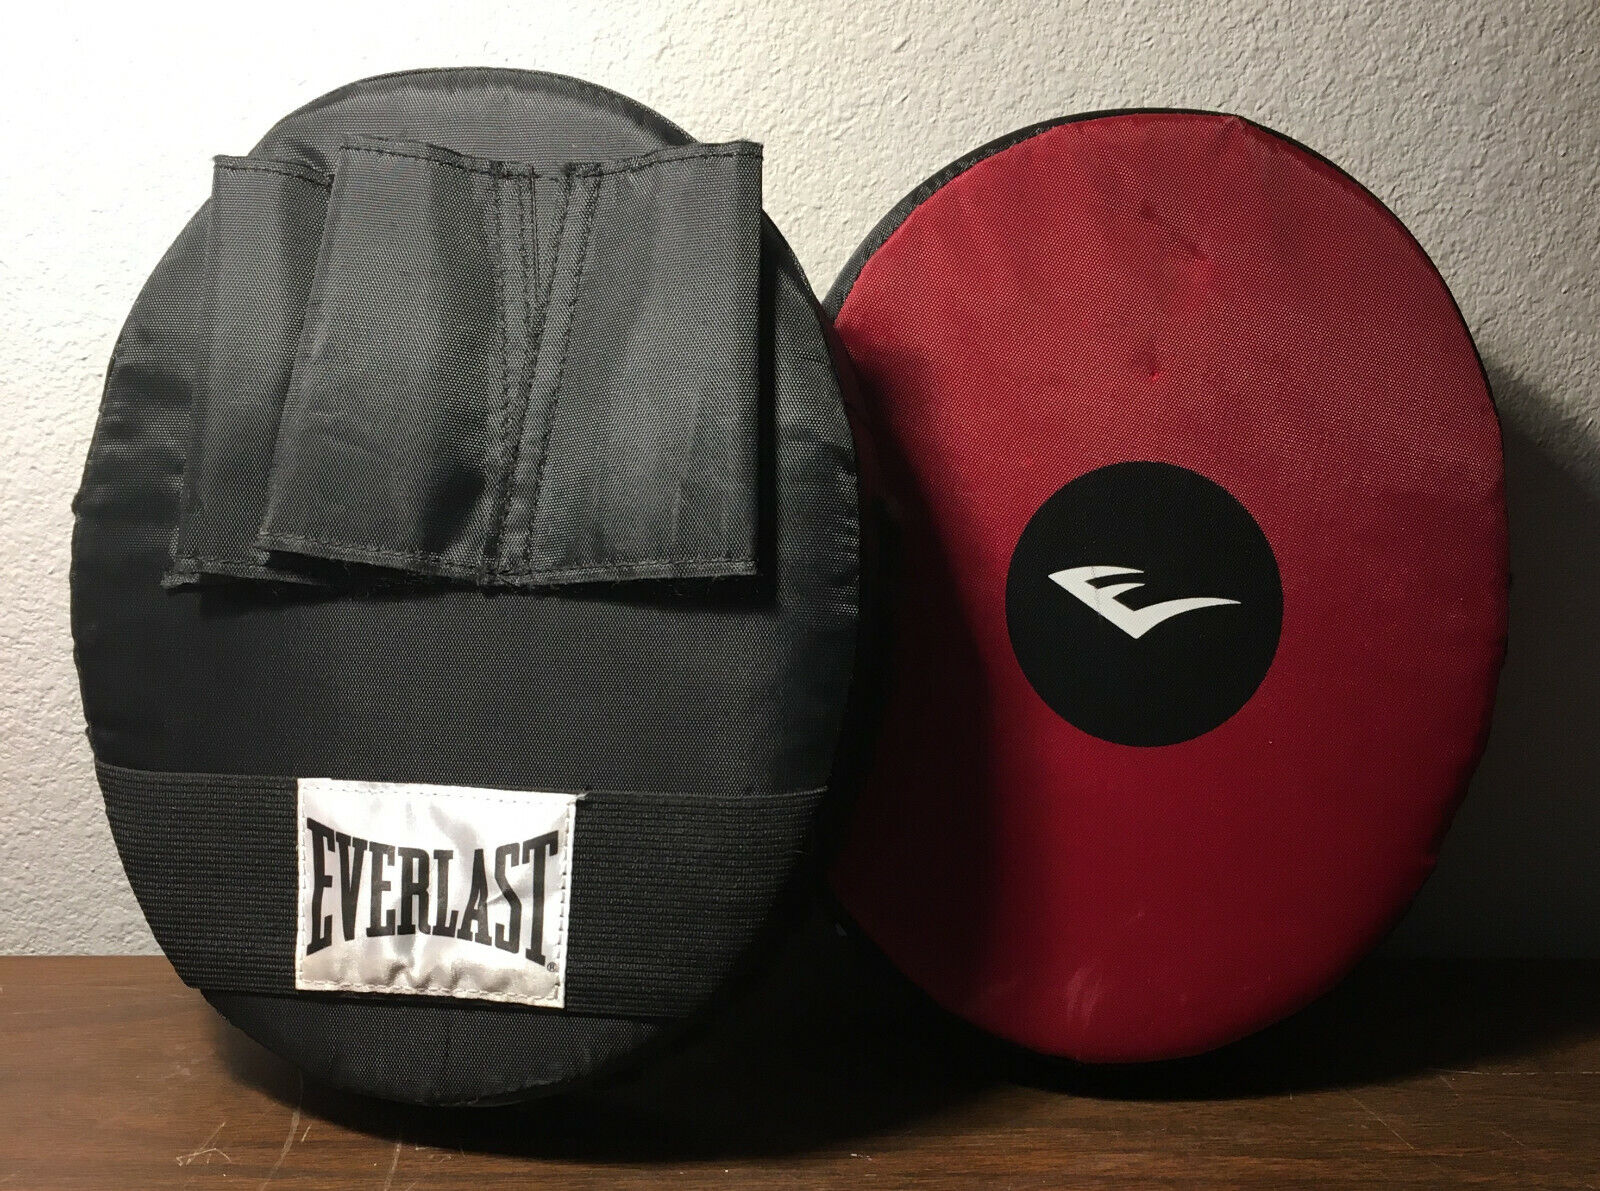 Everlast EverFresh Target Strike Pad Punch Boxing MMA Kick Sparring Training PR  Everlast Does Not Apply